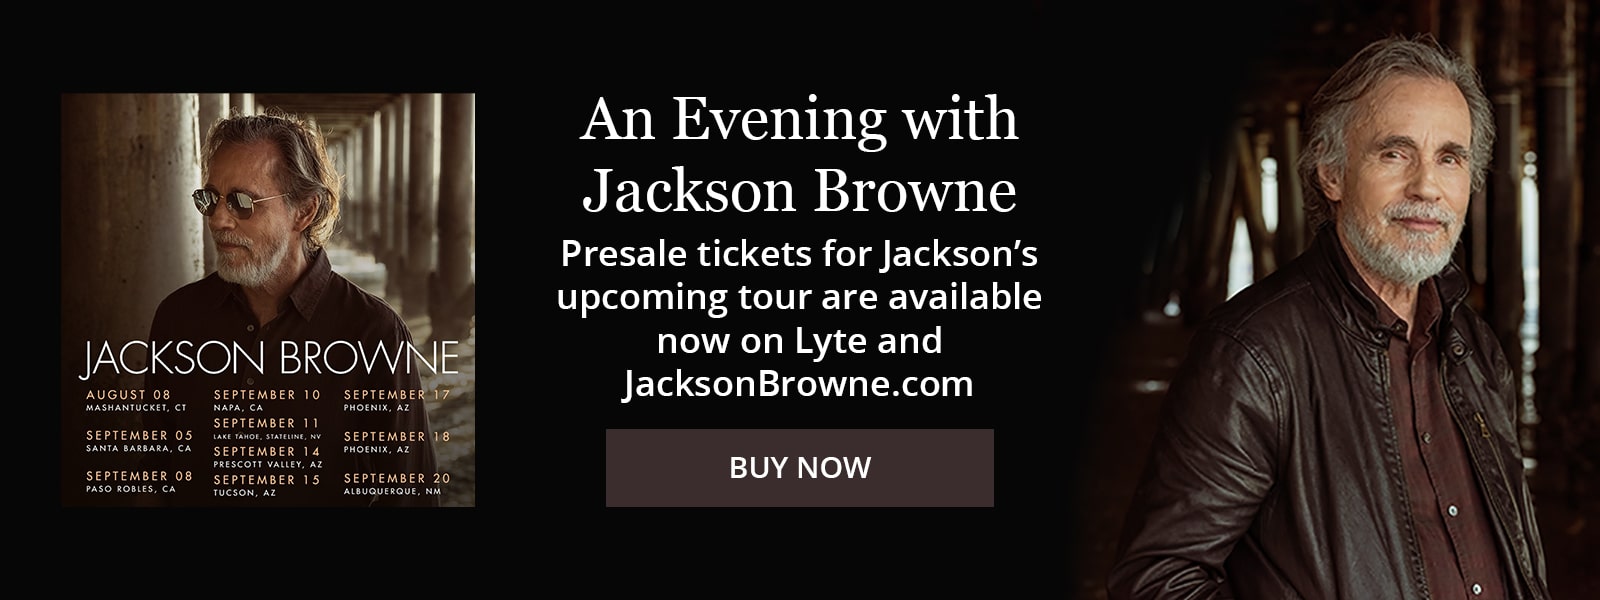 Jackson Browne Tour Schedule 2022 Jacksonbrowne.com | The Official Community Of Jackson Browne